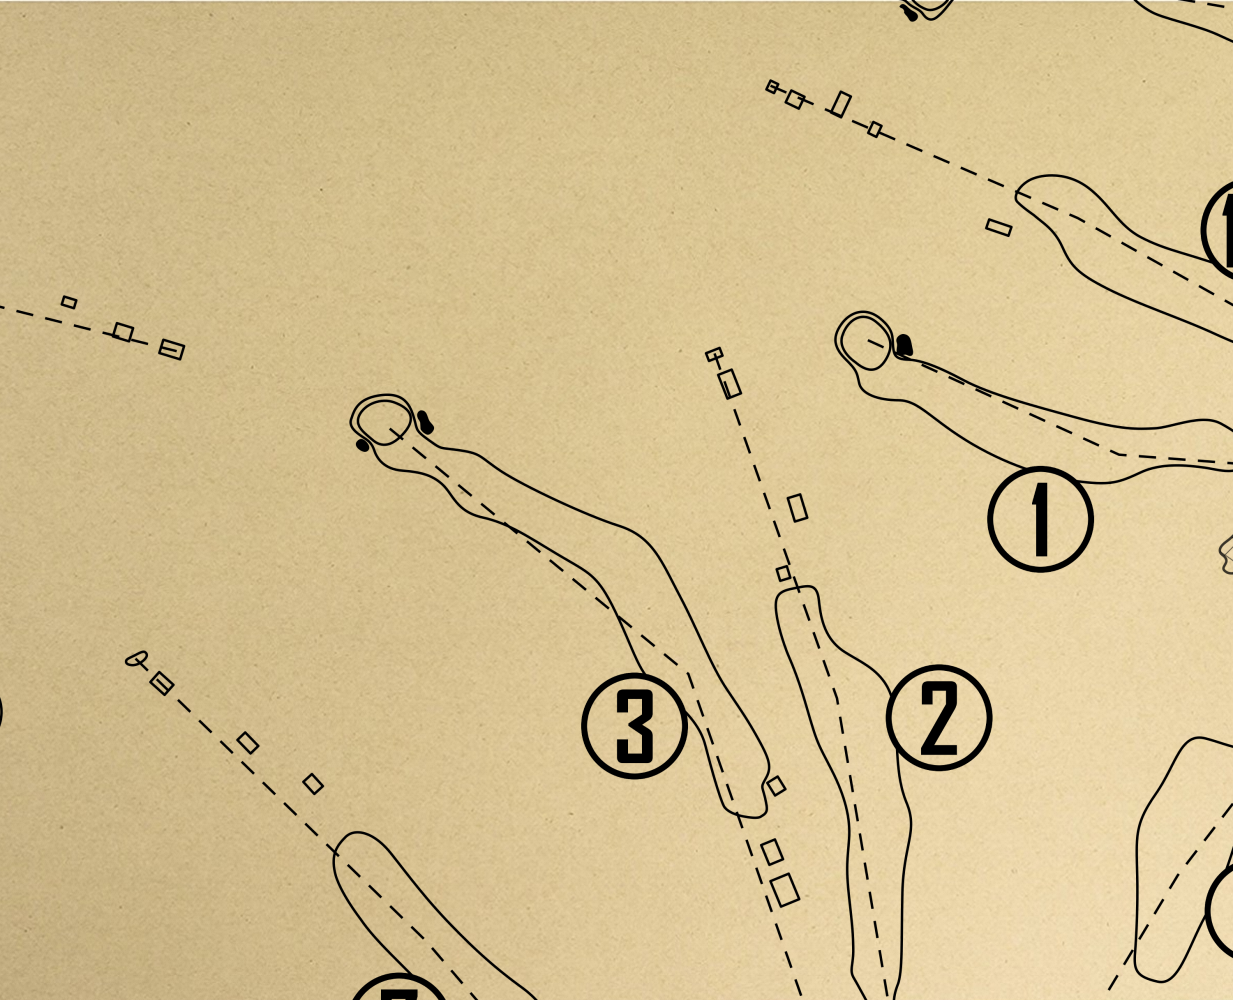 High Meadows Golf & Country Club Outline (Print)